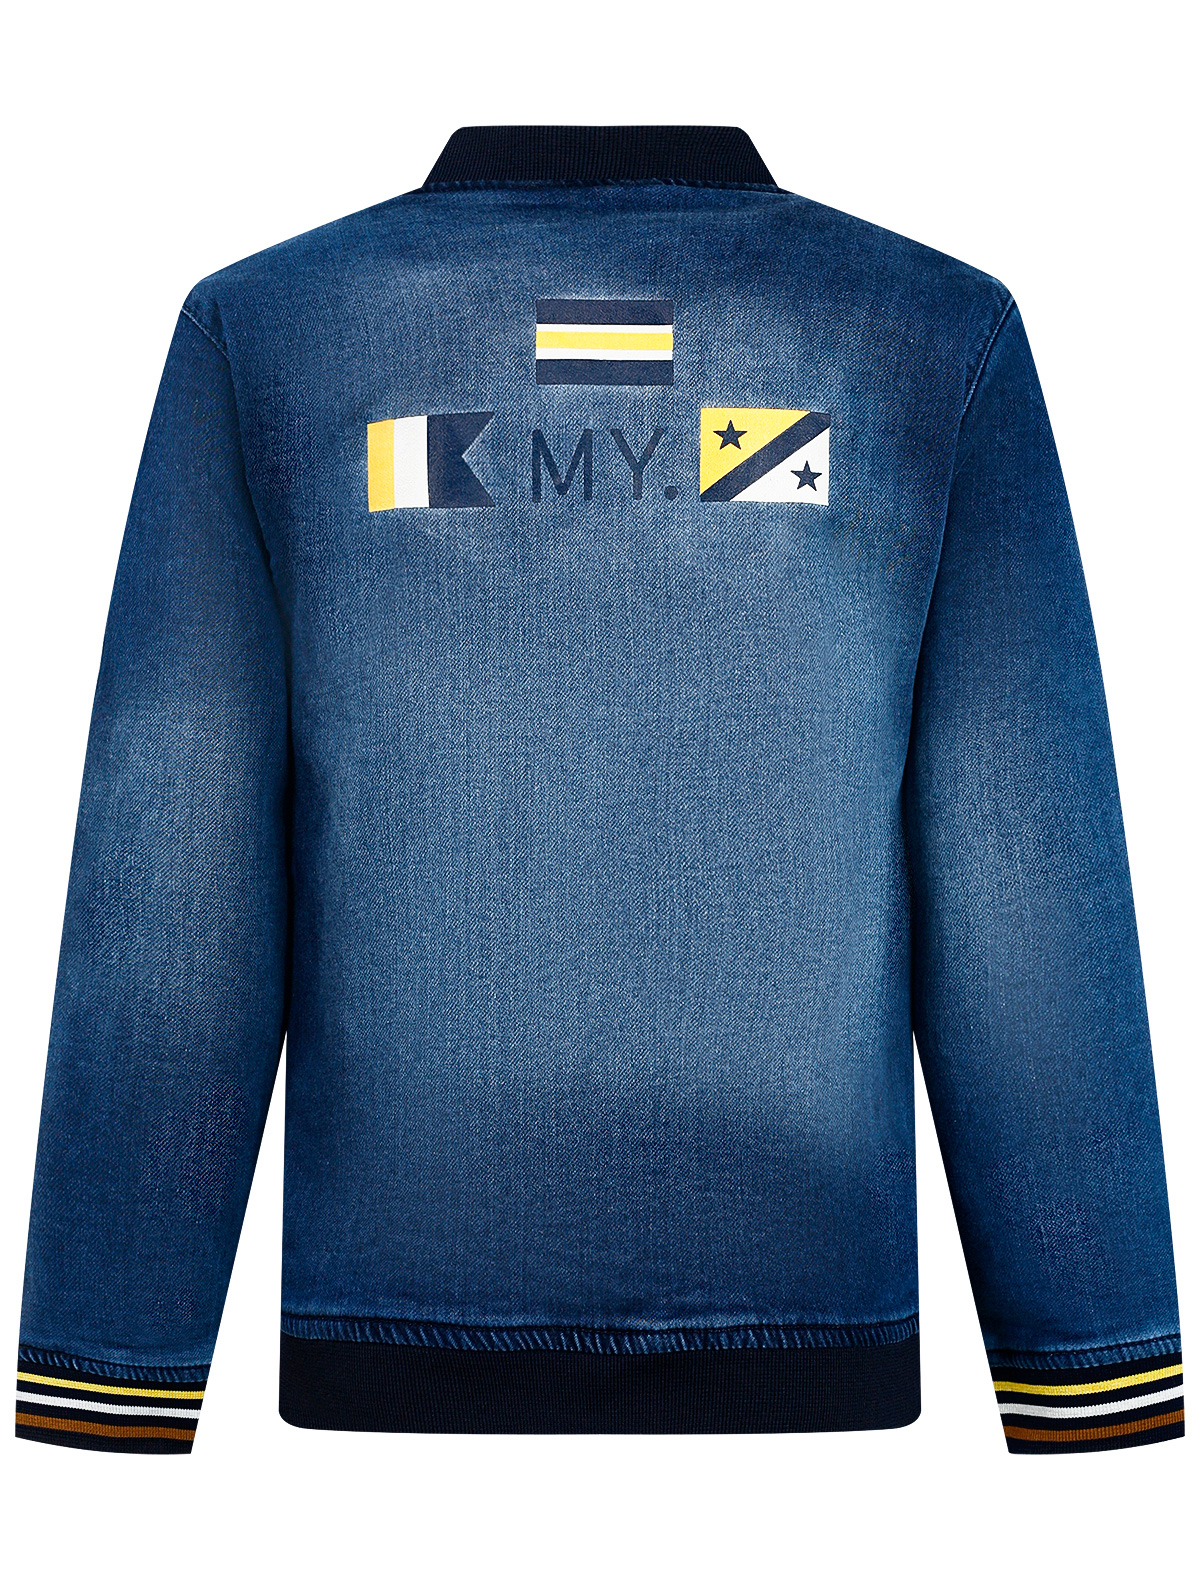 Куртка Mayoral 2299141, цвет синий, размер 8 1074519171550 - фото 2